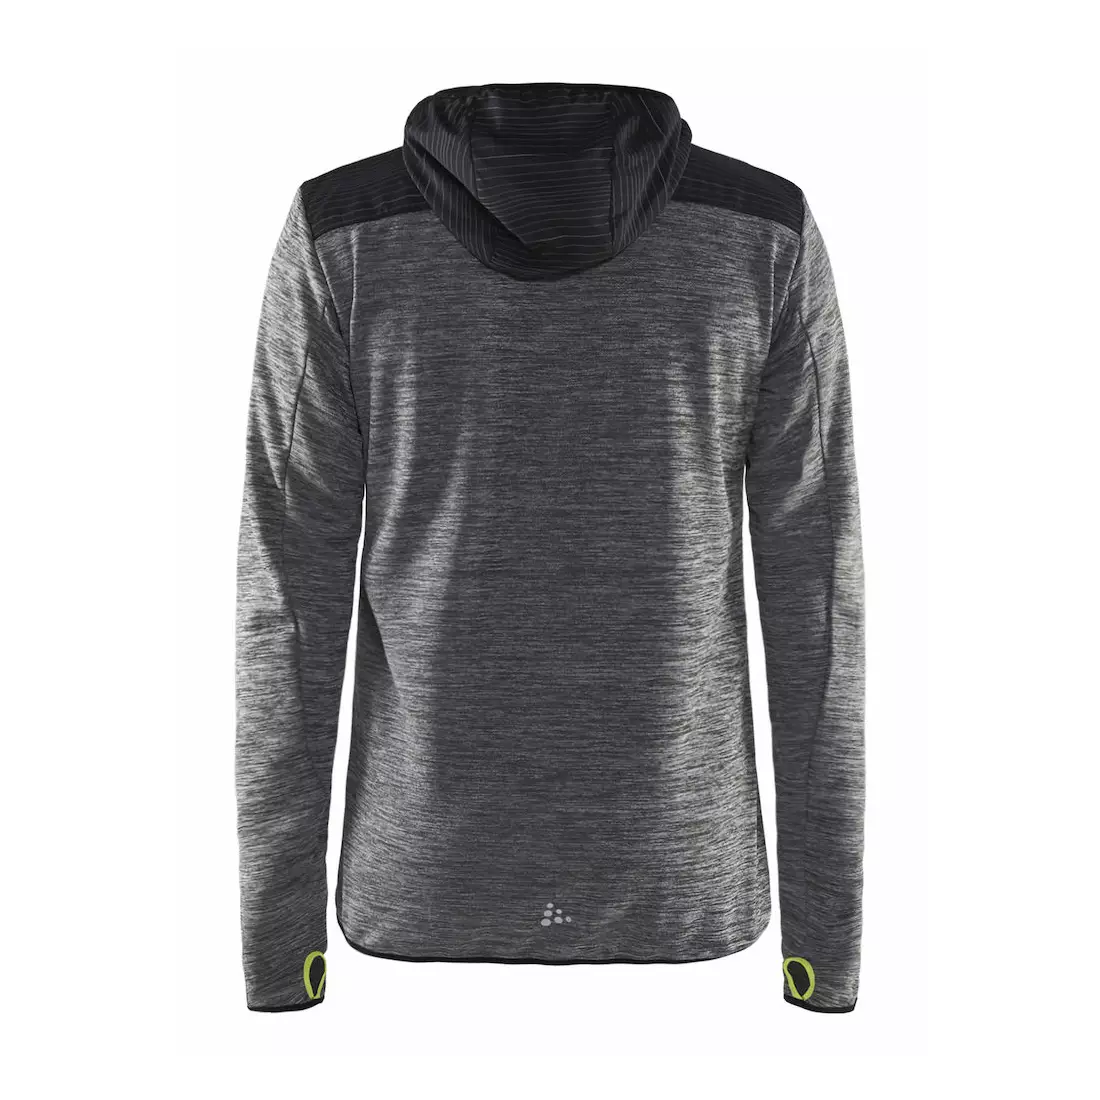 CRAFT BREAKAWAY men's sports sweatshirt, black and gray 1905498-975851